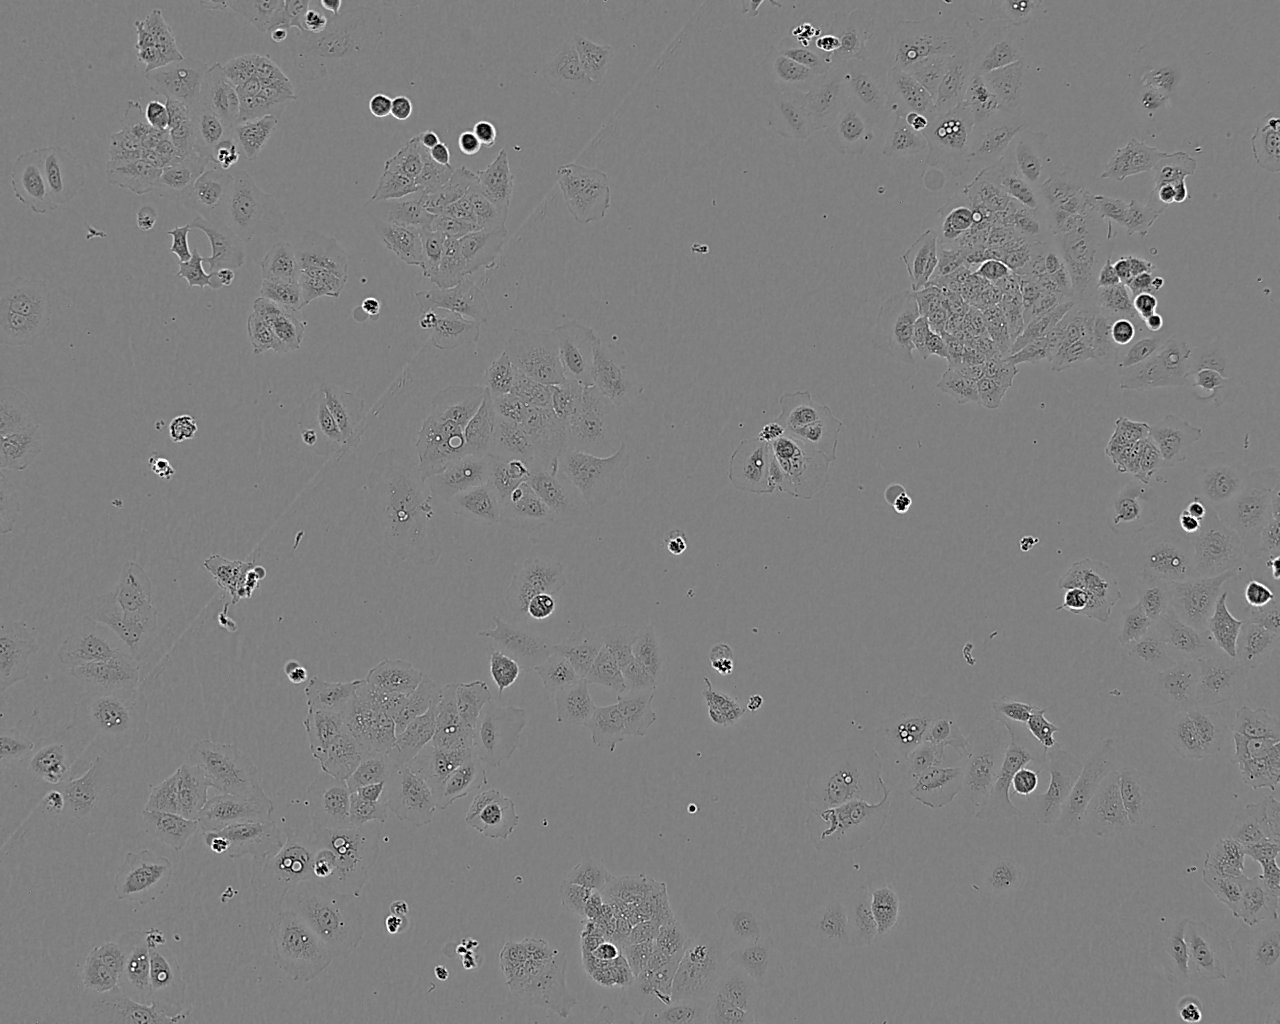 RWPE-2 Cell|人正常前列腺上皮细胞,RWPE-2 Cell